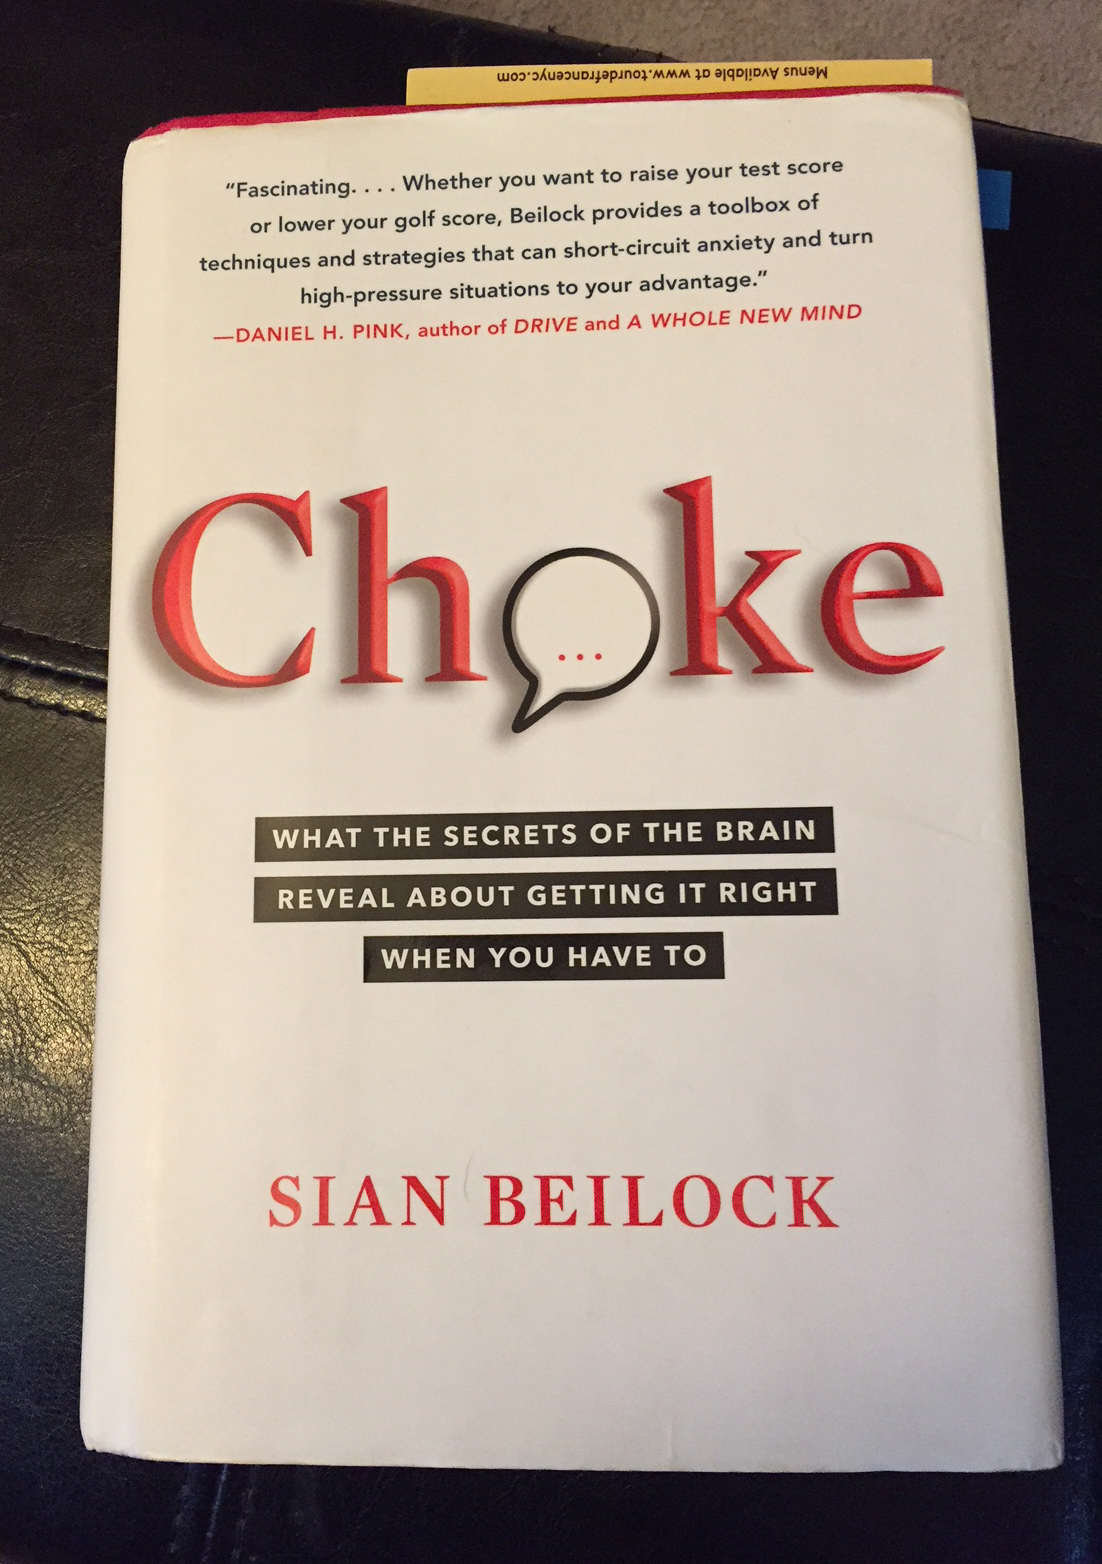 Choke by Sian Beilock